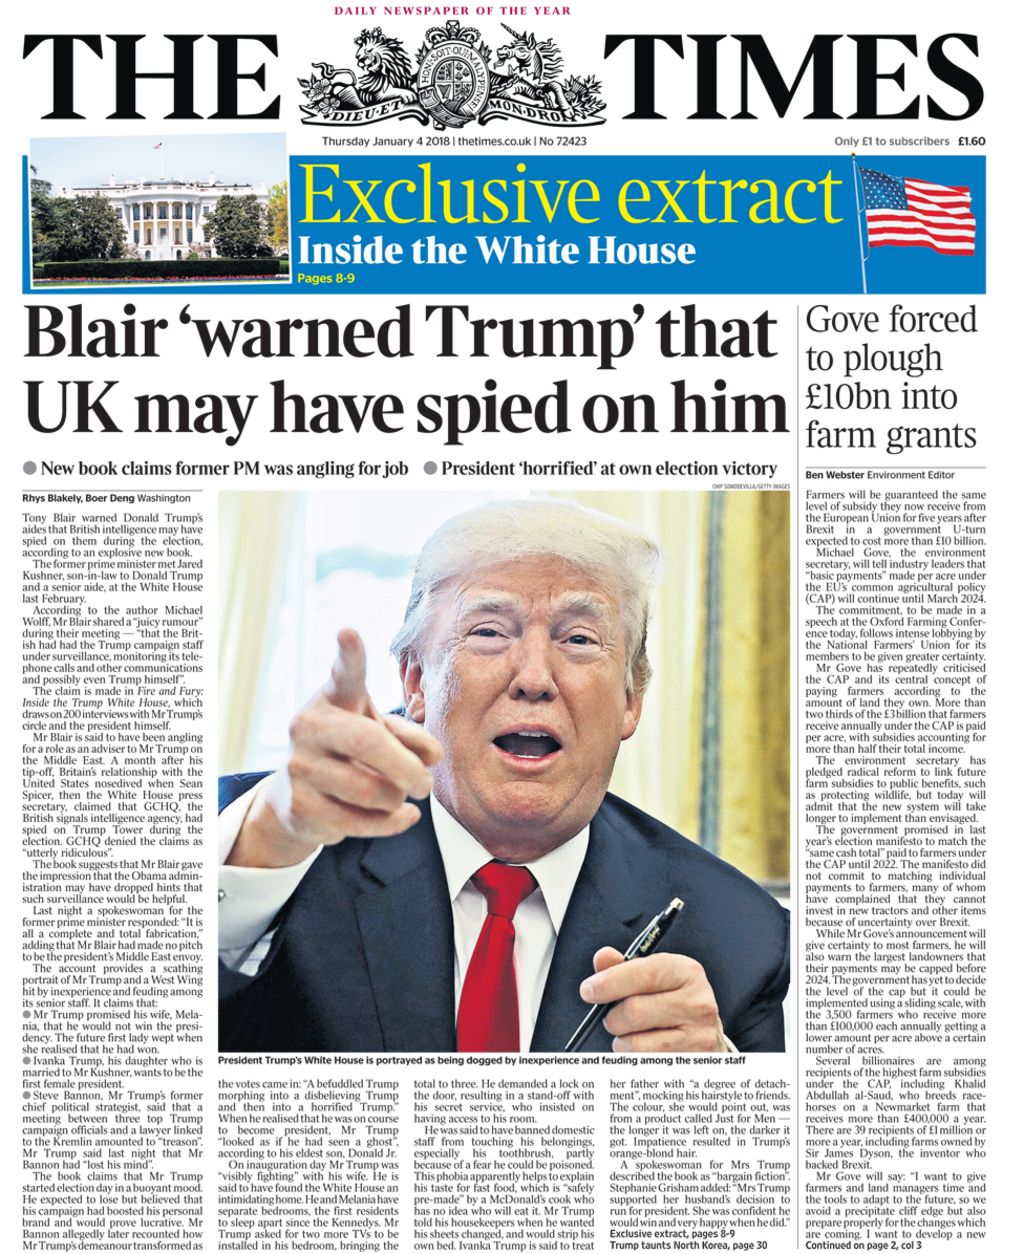 Newspaper headlines: Blair 'warned Trump' over UK spying - BBC News